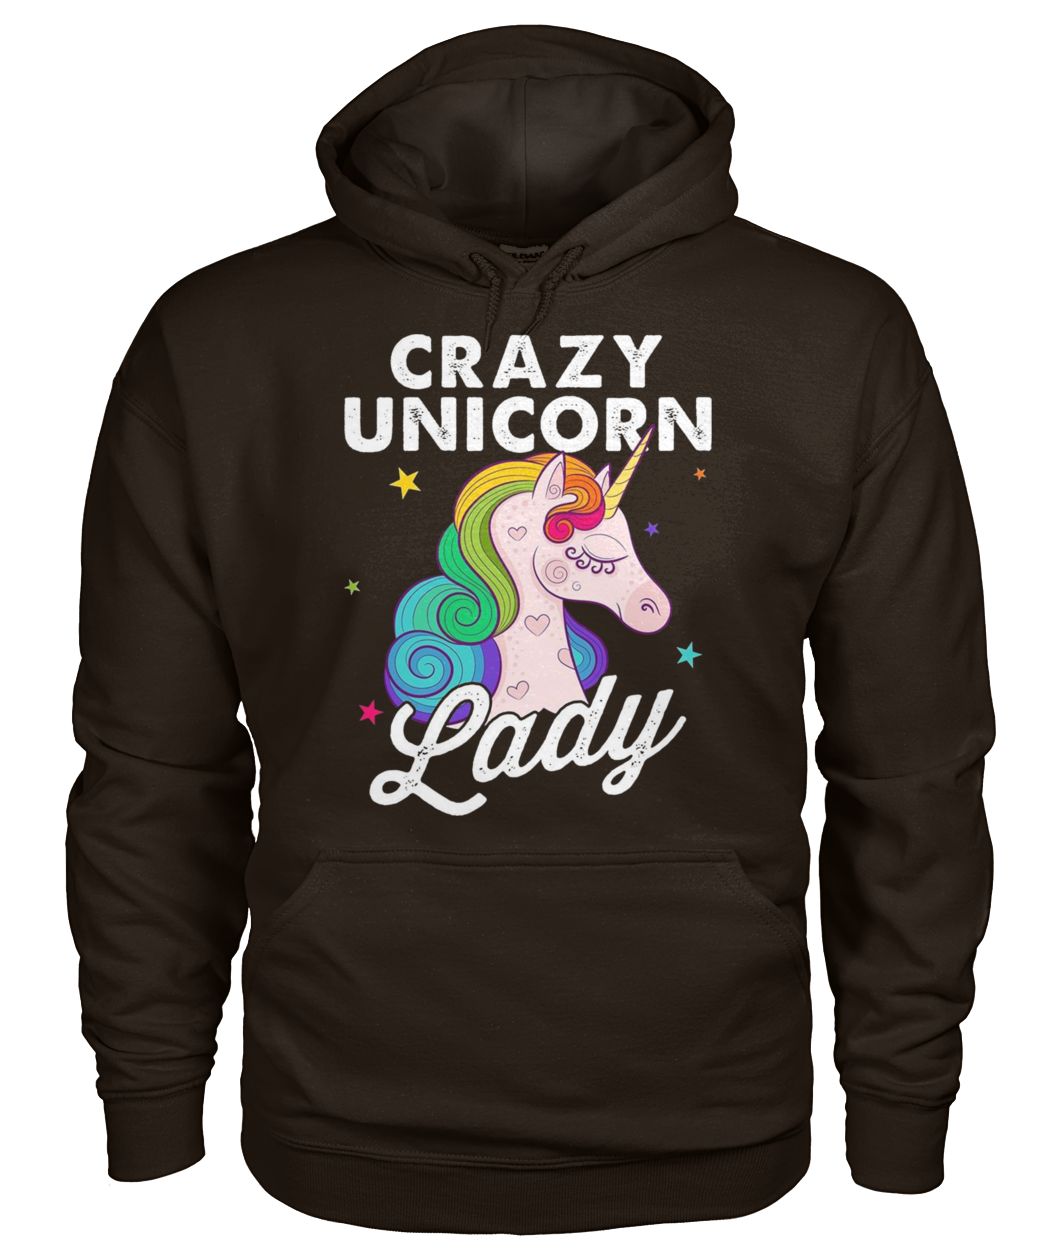 Crazy unicorn lady gildan hoodie